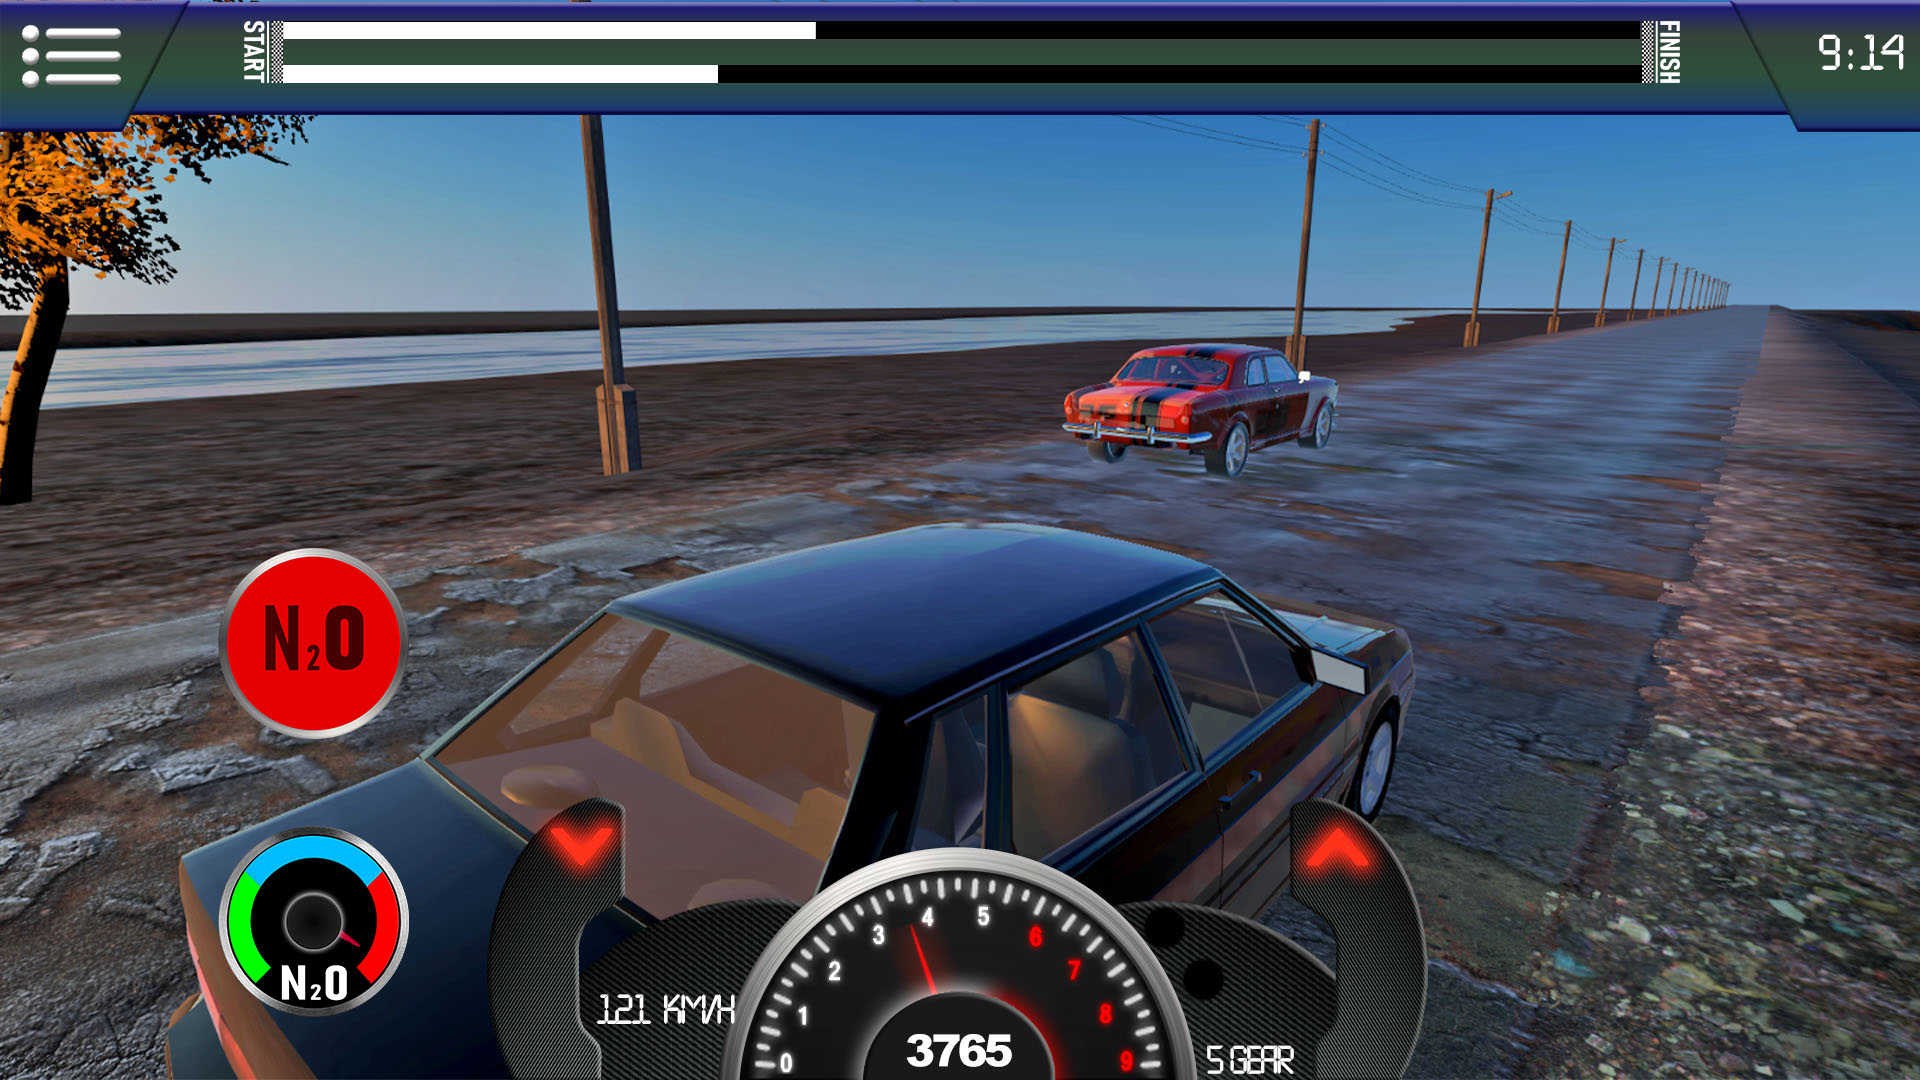 VAZ-2108 Driving Simulator Game - Play Online